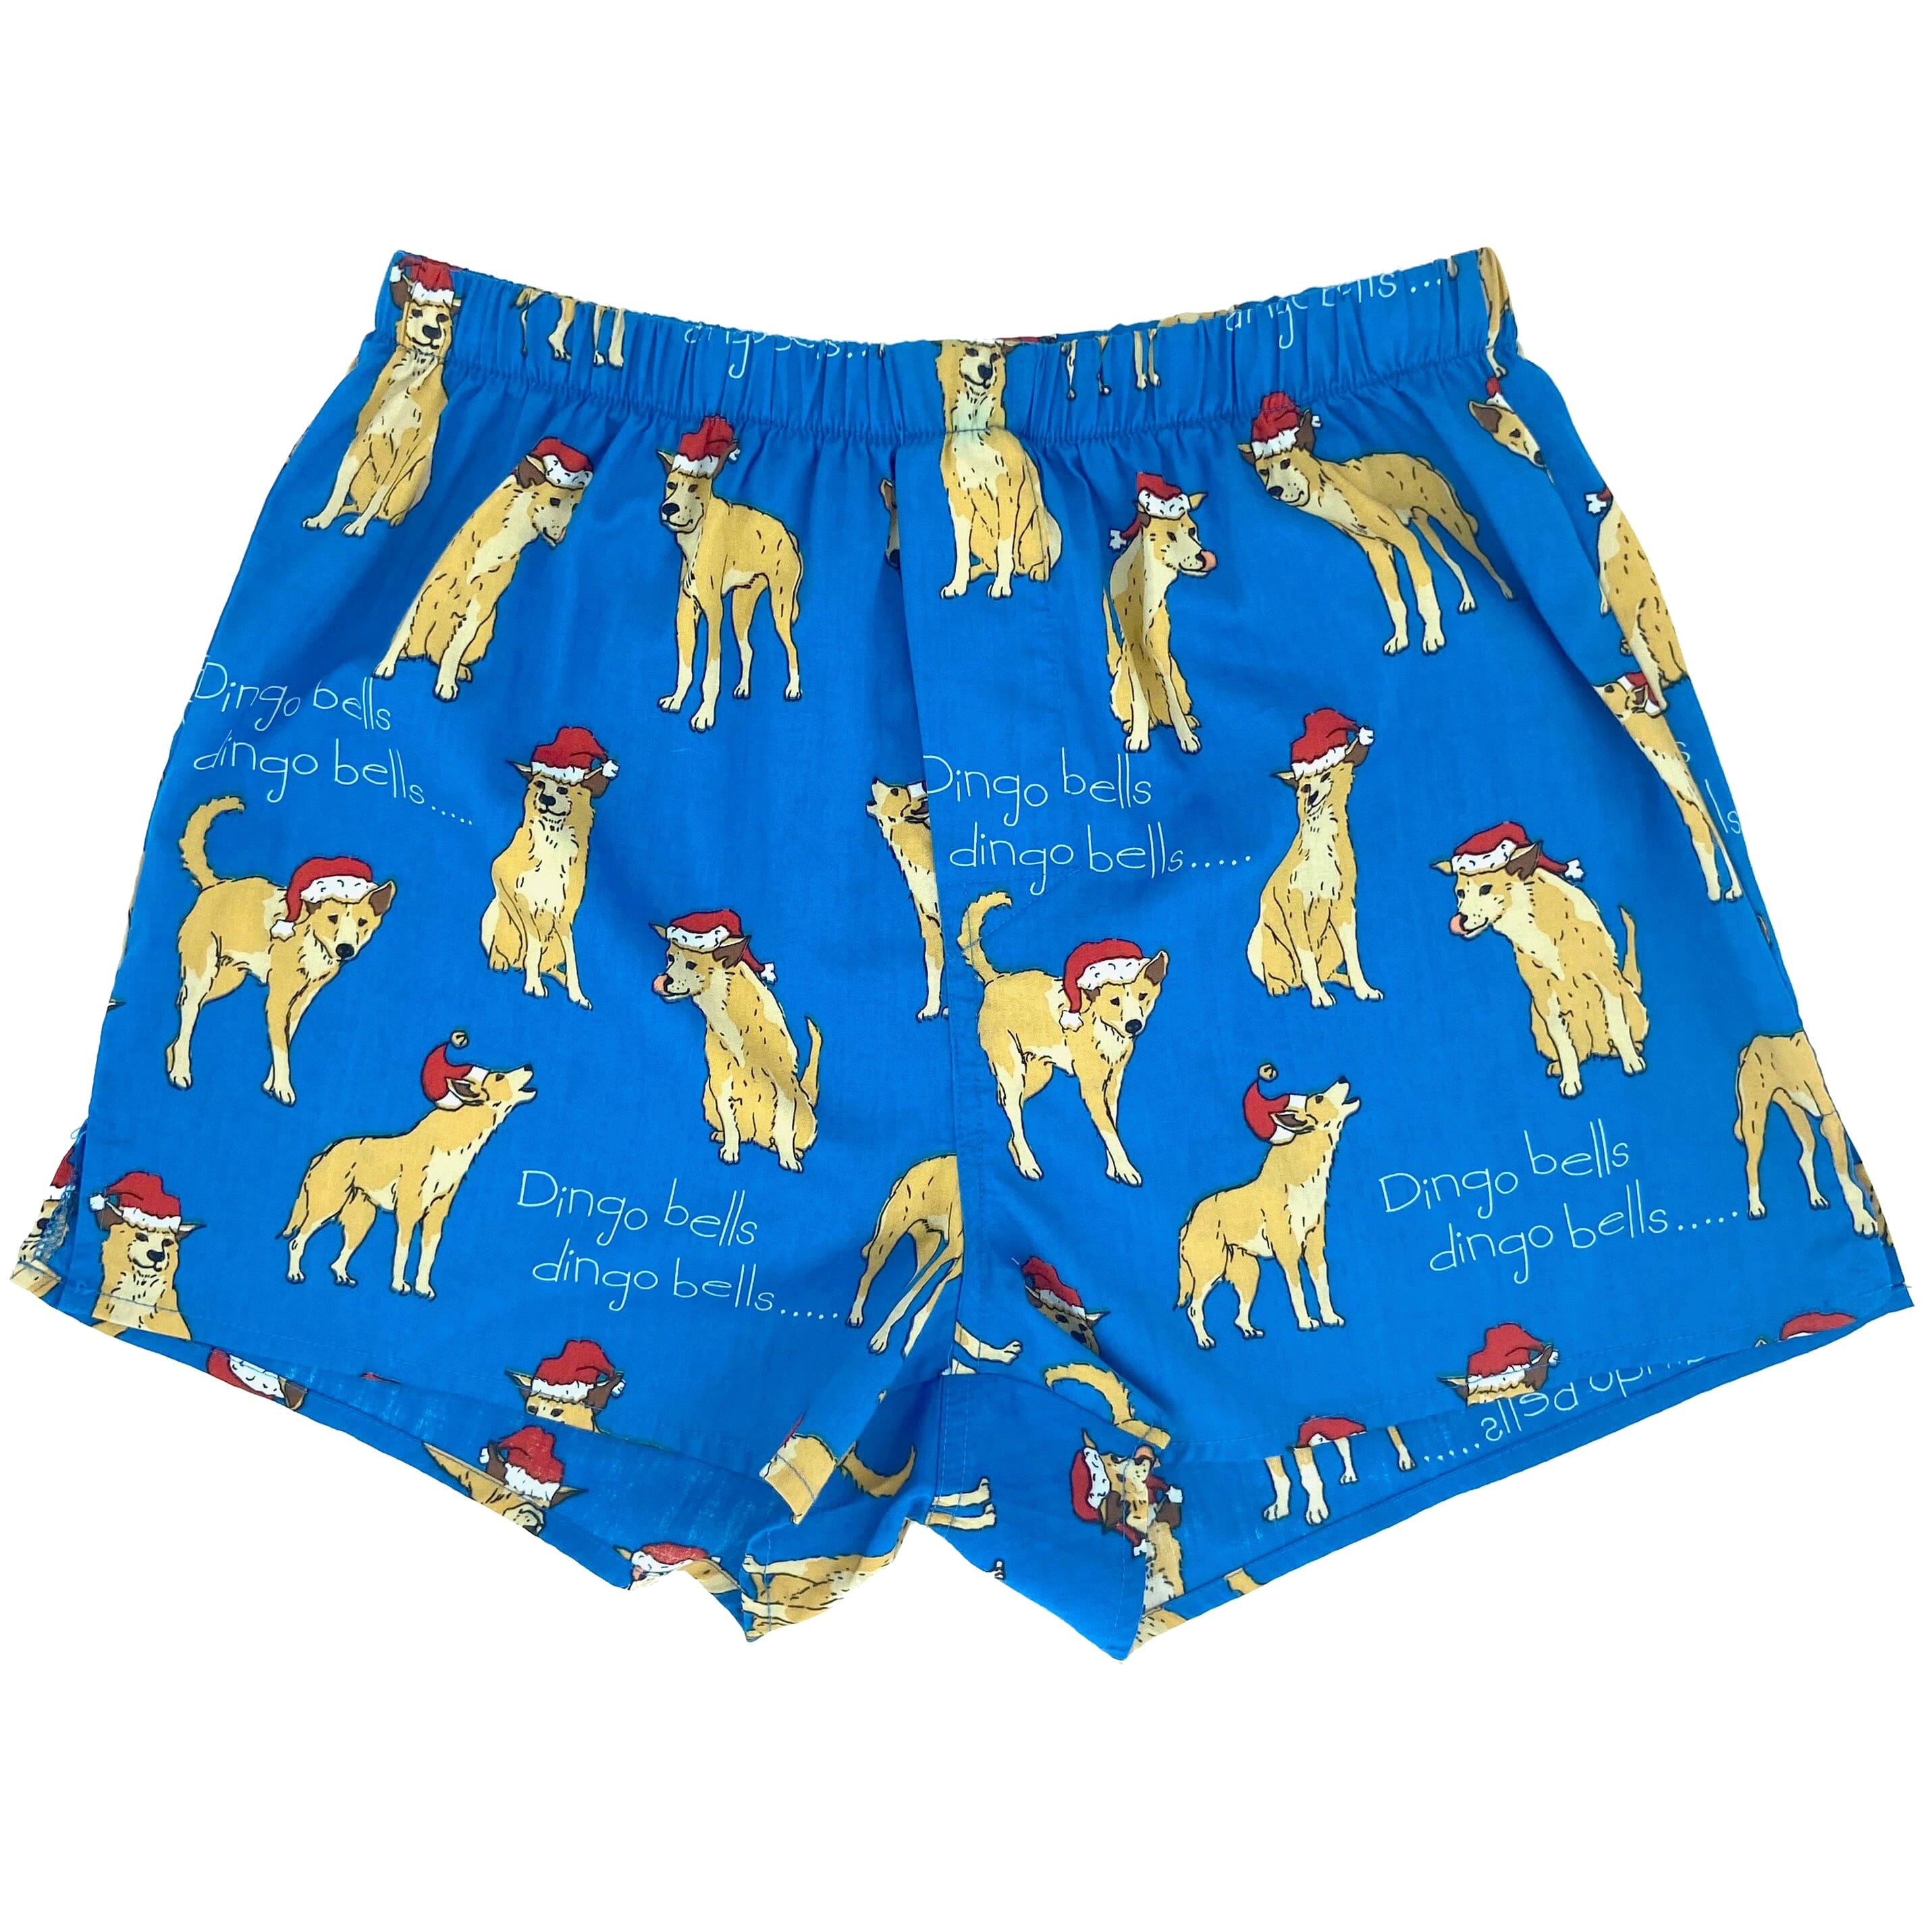 Men's Bright Blue Dingoes Wearing Santa Hats Dingo Bells Boxer Shorts